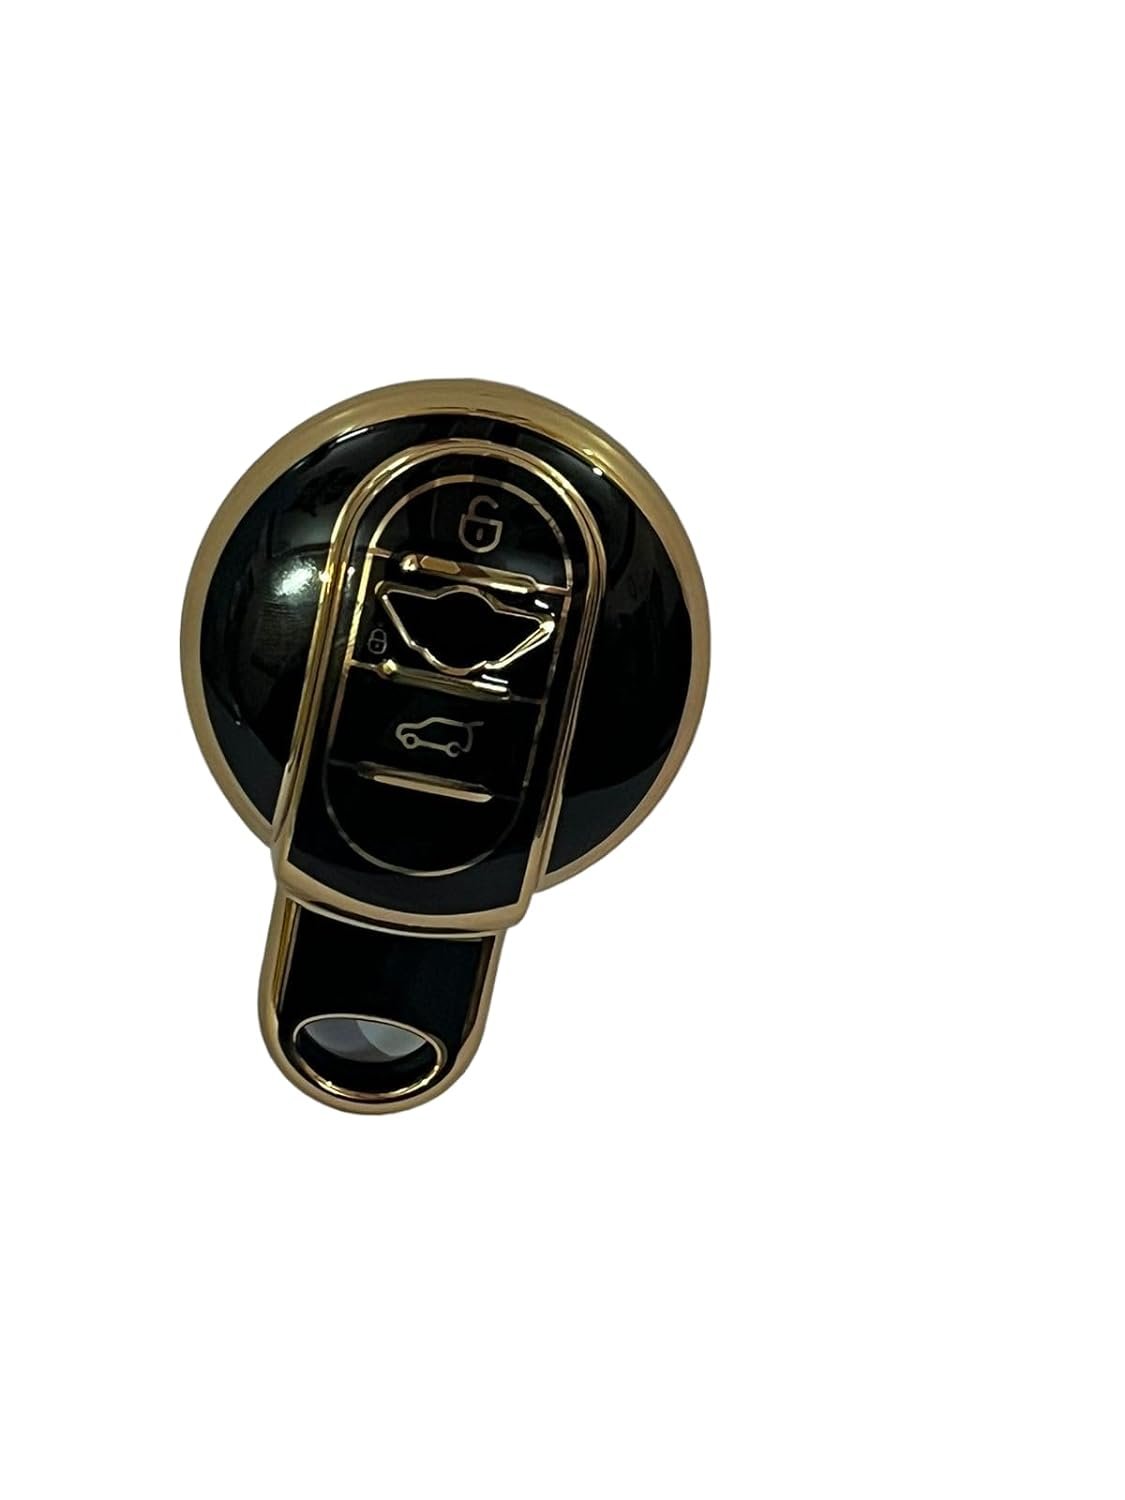 TPU Car Key Cover Compatible with Mini Cooper F55 Clubman F54 Hatch F56 Cabrio F57 Countryman Cooper S Cooper D Cooper SD F60 3 Buttons (Black/Gold) Image 